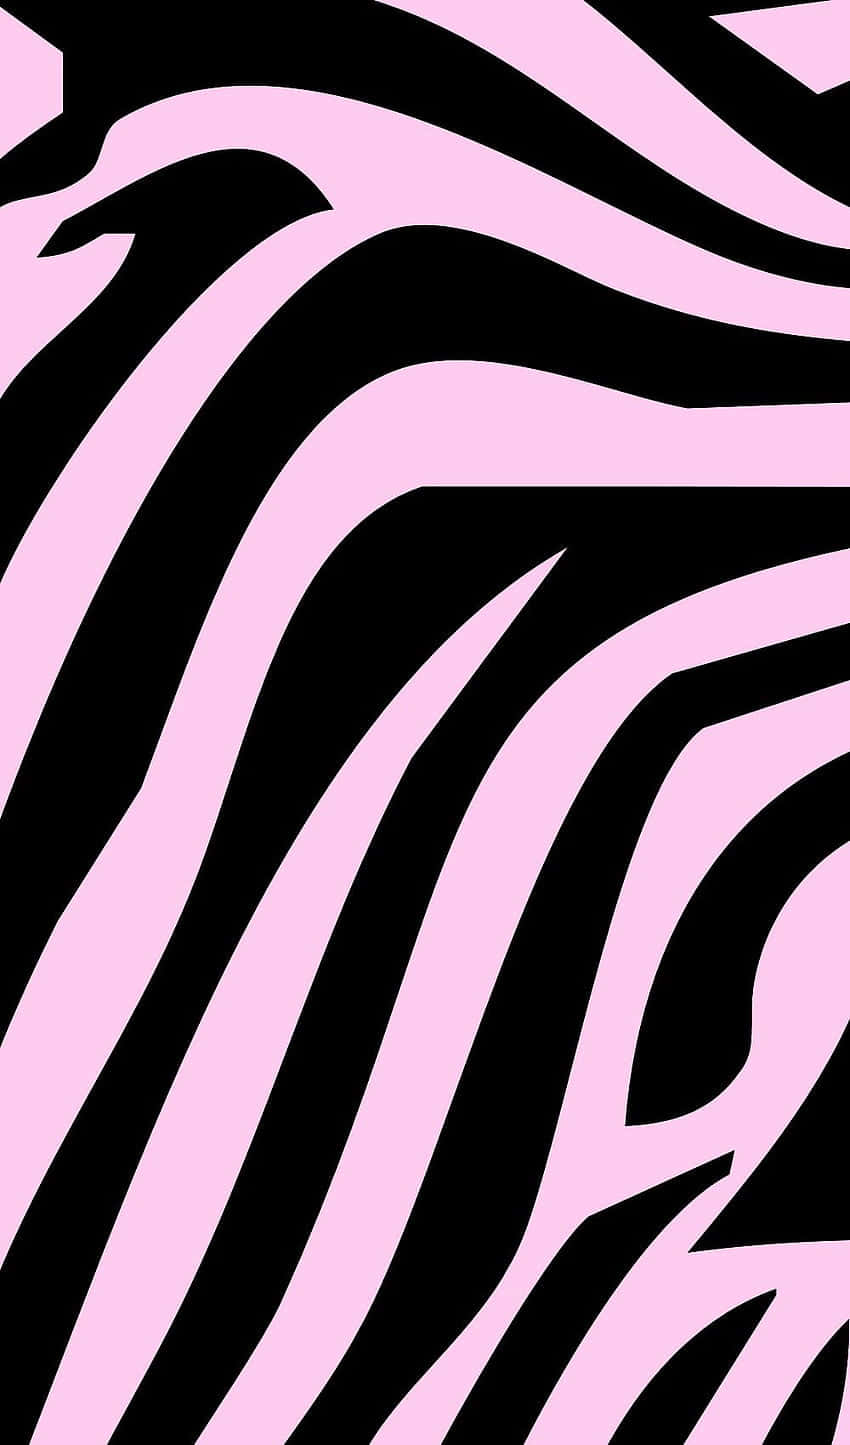 A Pink And Black Zebra Print Background